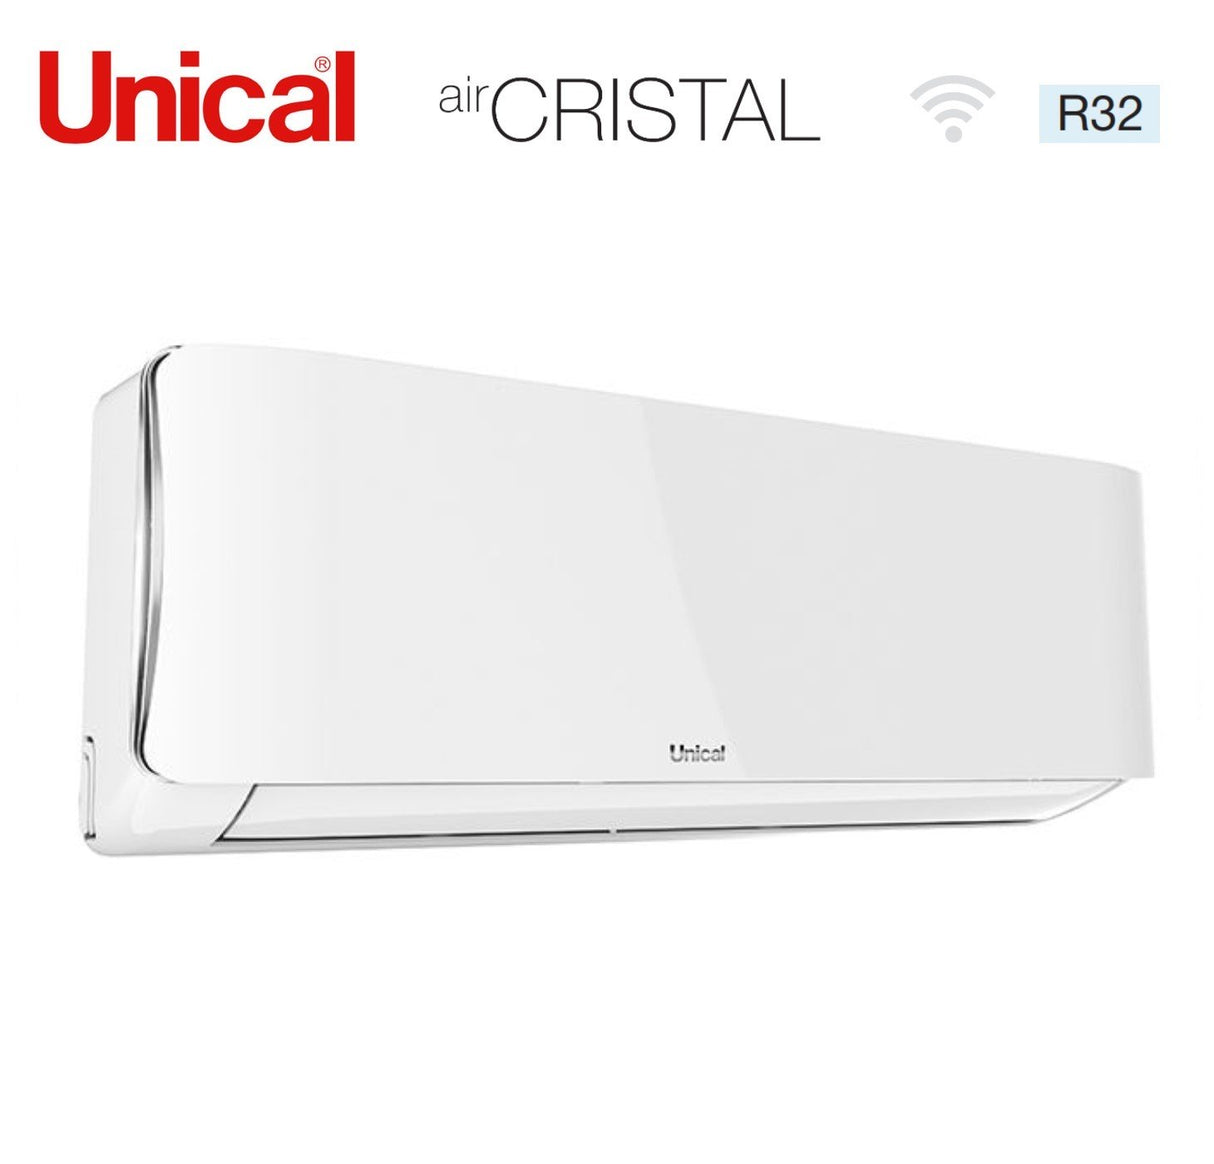 immagine-4-unical-climatizzatore-condizionatore-unical-dual-split-inverter-serie-air-cristal-1313-con-xmx3-21he-r-32-wi-fi-optional-1300013000